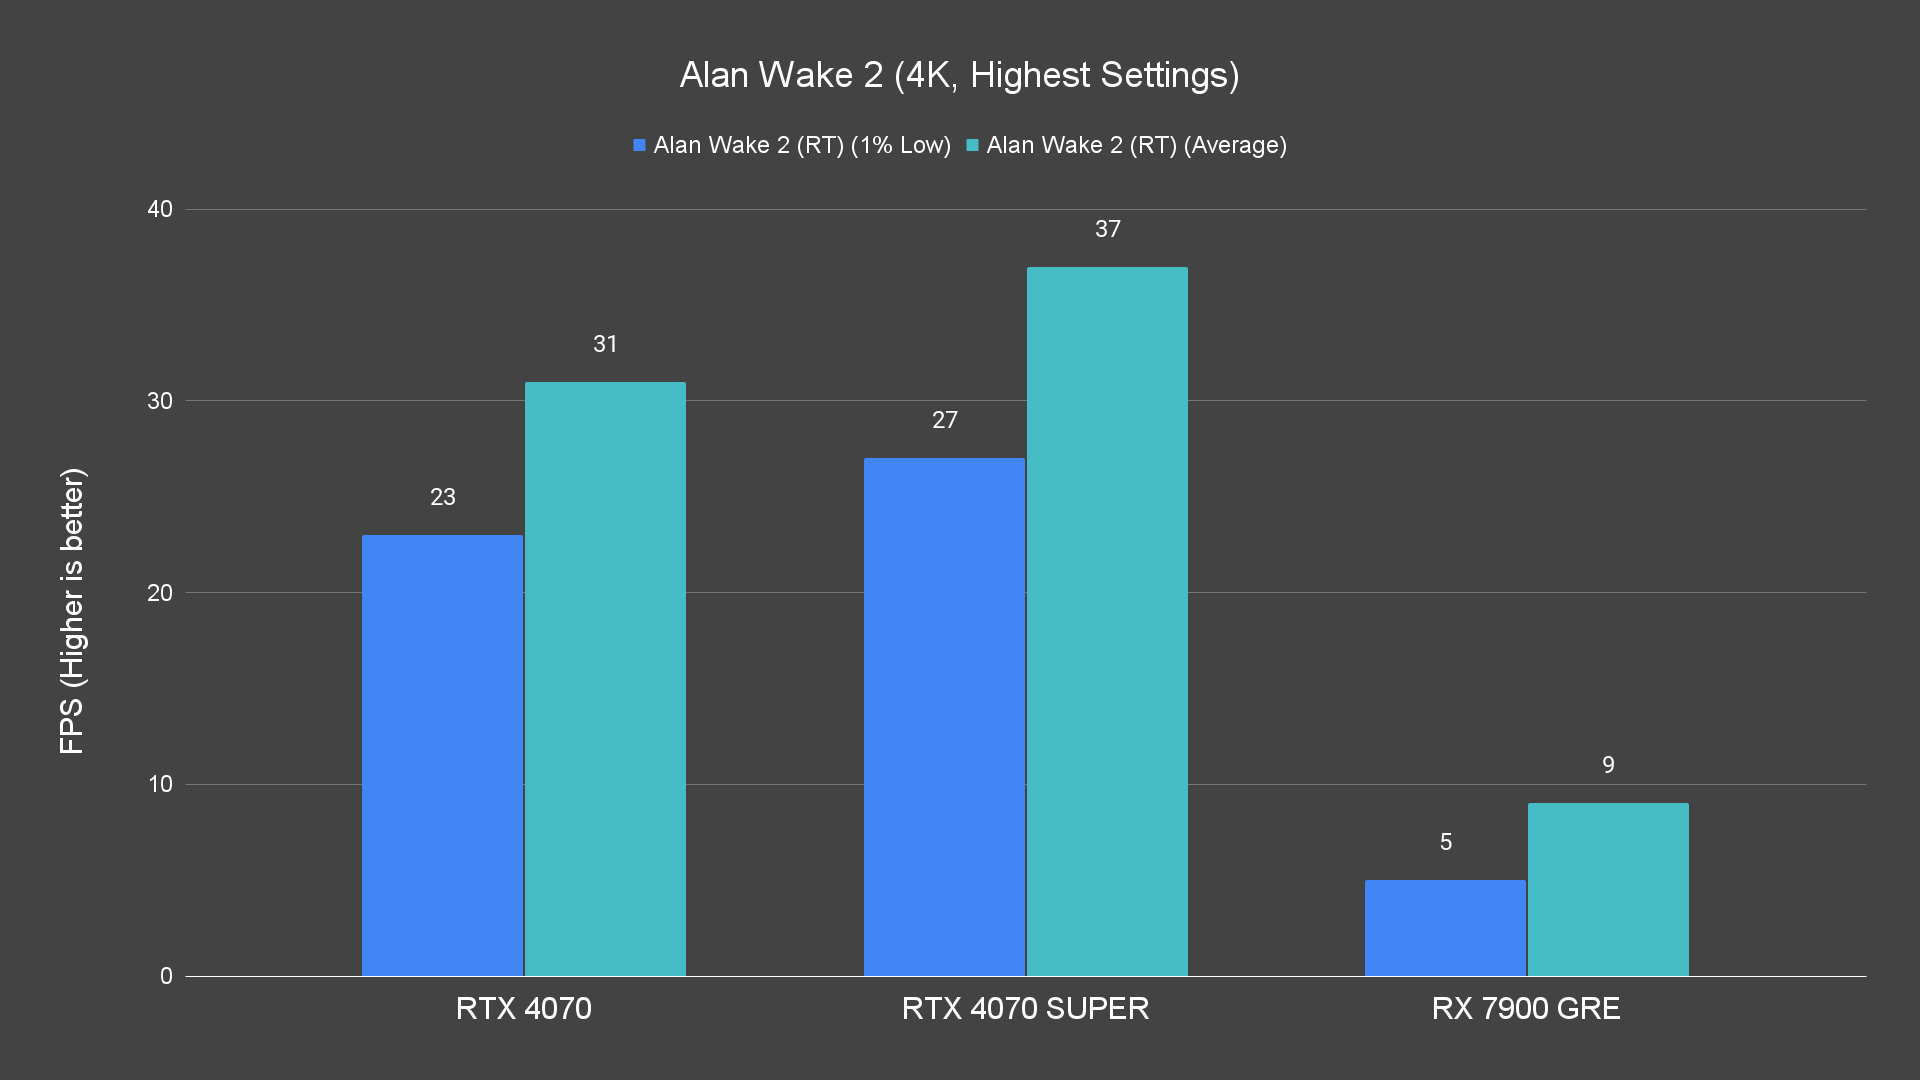 Alan Wake 2 (4K, Highest Settings) RX 7900 GRE